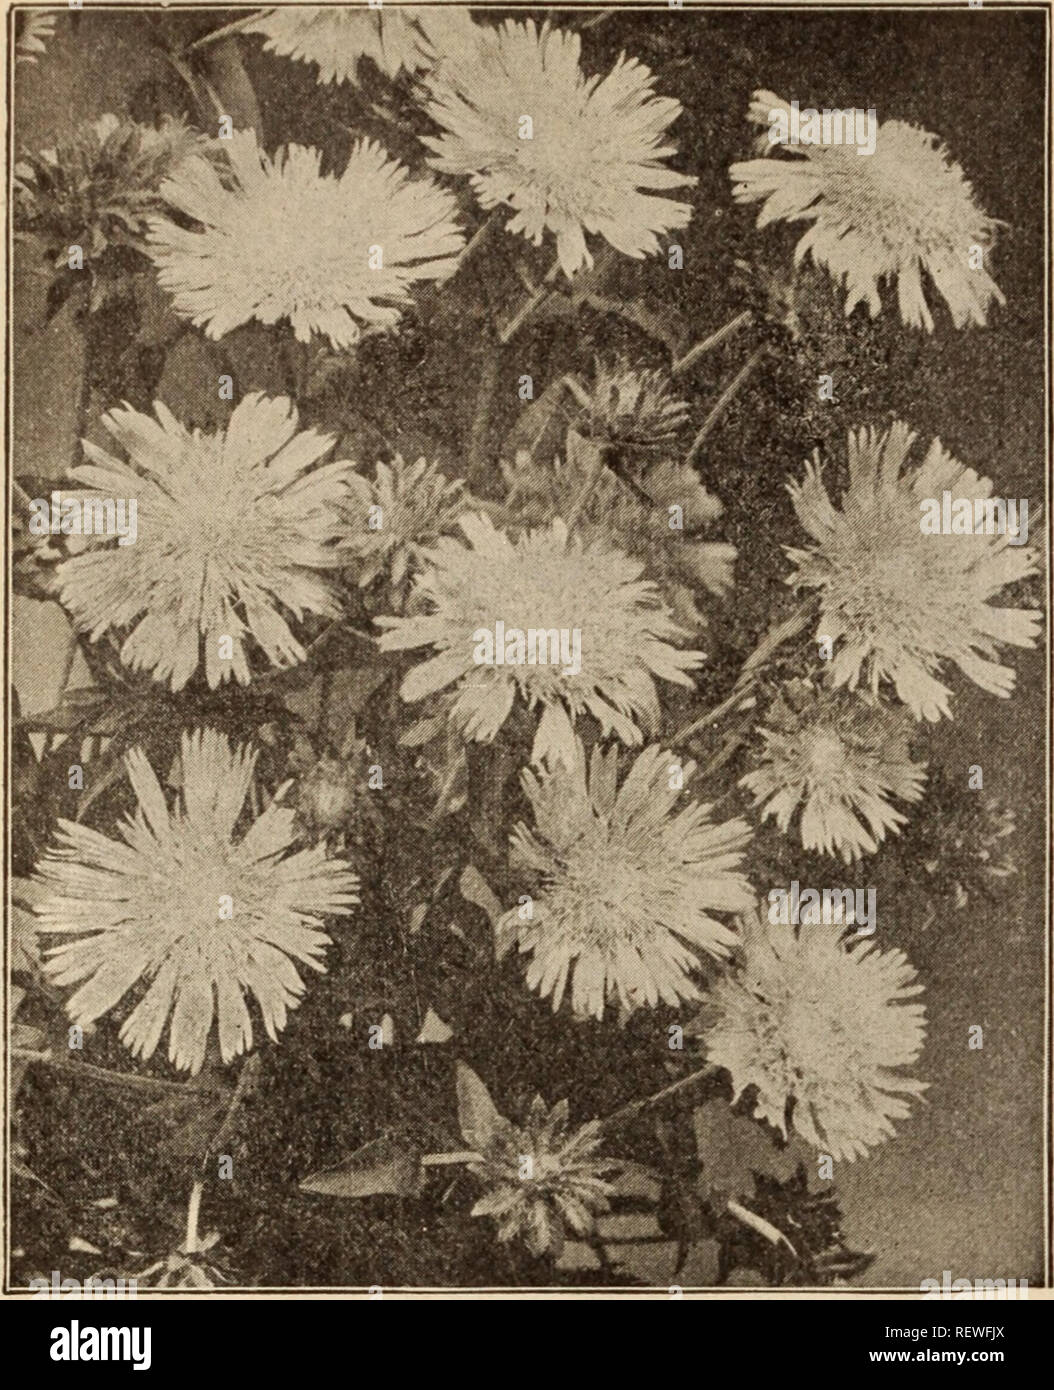 . Dreer's wholesale price list / Henry A. Dreer.. Nursery Catalogue. 52 HENRY A. DREER, PHILADELPHIA, PA., WHOLHSALE PRICE LIST. STOKESIA CYANEA (Comflower Aster) Scutellaria (Skull Cap). Per doz. Per 100 Caelestina. 3-inch pots $1 00 $7 00 Sedum (Stonecrop). Acre. 4-inch pots 85 6 GO Album. Divisions. 4-inch pots 85 6 00 Japonica Macrophylla. 4-inch pots 1 00 7 00 Lydium Glaucum. 3-inch pots 1 00 7 00 Sexangulare. 4-inch pots 85 6 00 Spectabilis Atropurpureum. Showy heads of hand- some deep rosy-crimson flowers . 1 00 7 00 Spectabilis Brilliant (new). The brightest of the up- right growing so Stock Photo